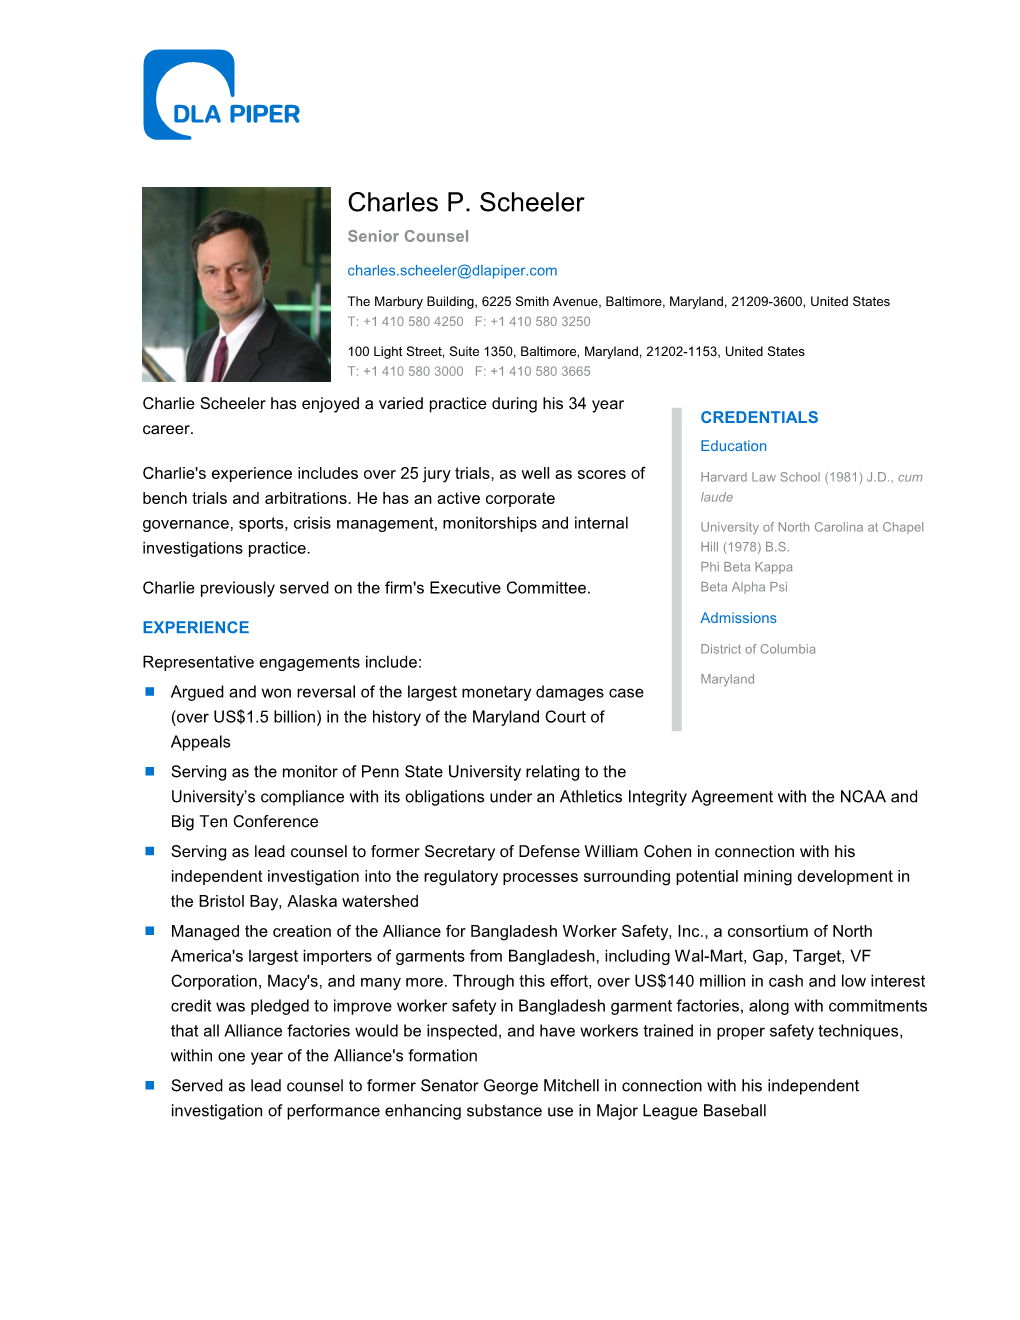 Charles P. Scheeler Senior Counsel